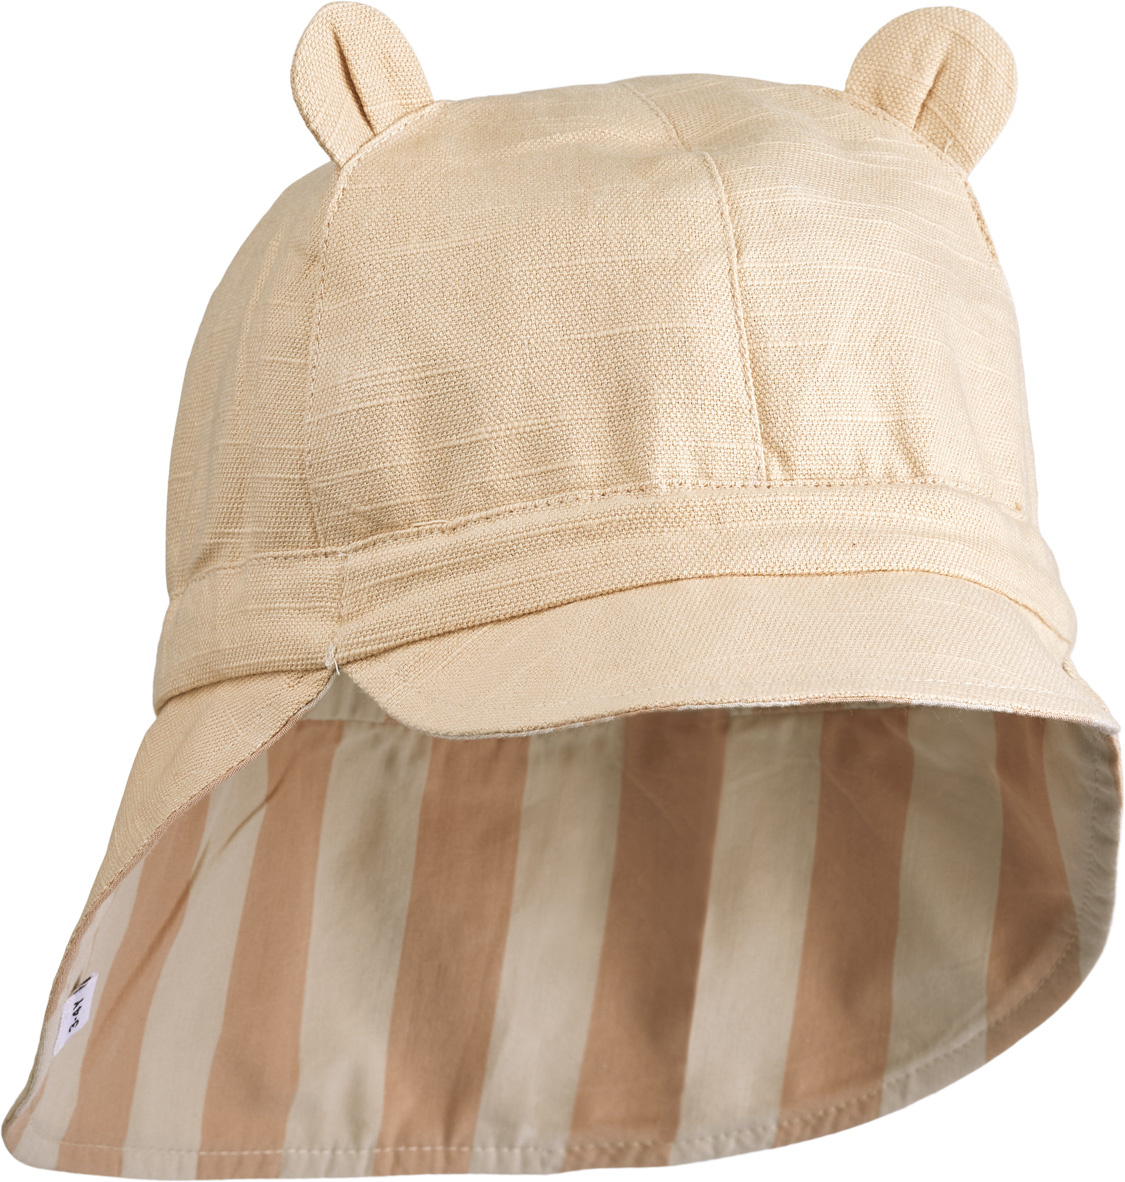 Gorm reversible sun hat yarn dyed - Stripe: Pale tuscany/sandy-2